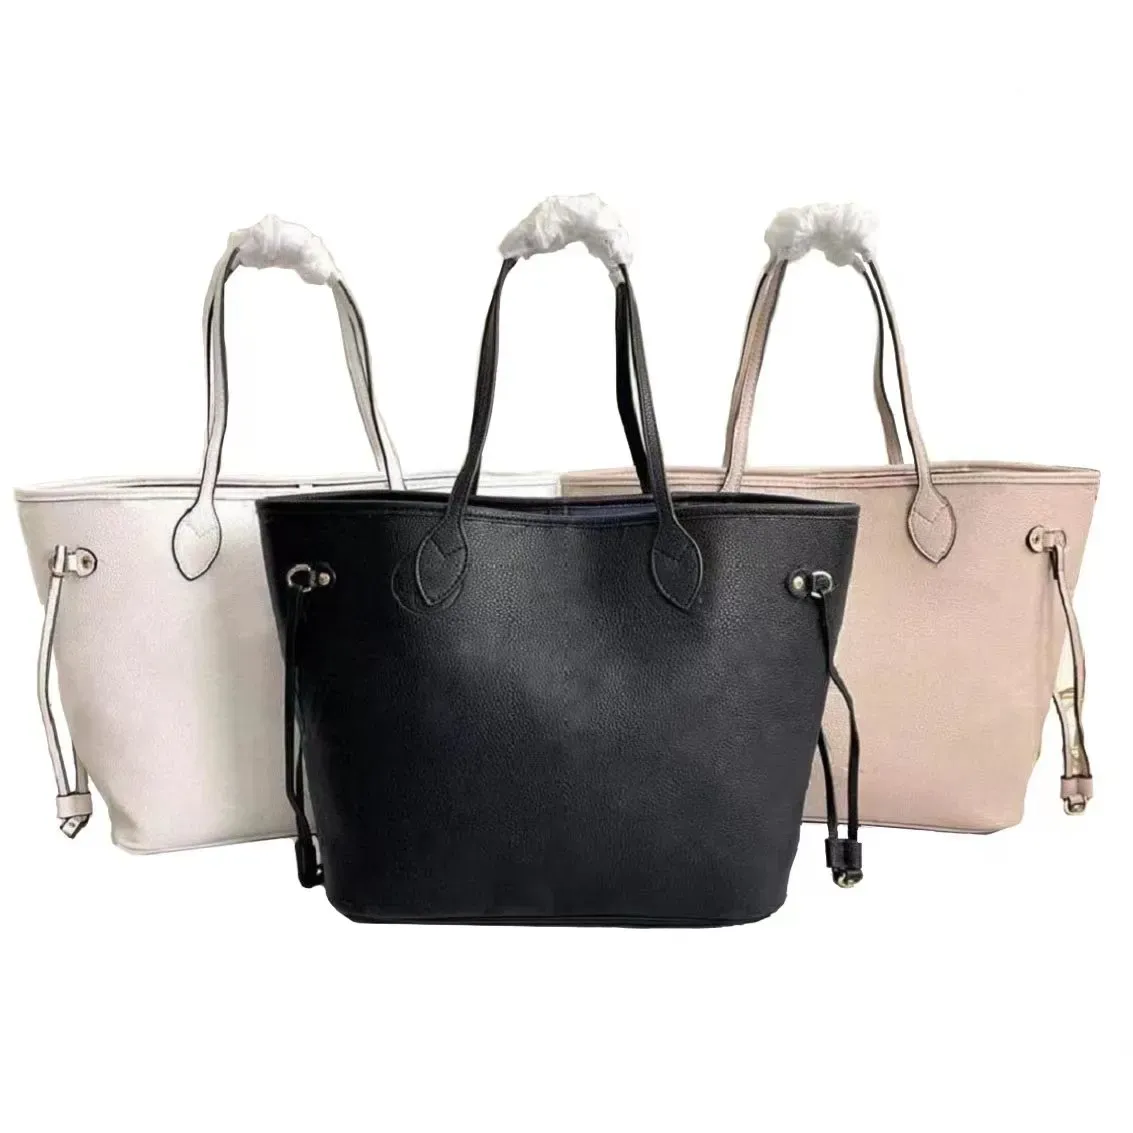 classic luxury designer bag purses handbags Clutch Fashion shopping handbag MM tote crossbodys shoulder bags free ship 3 colors